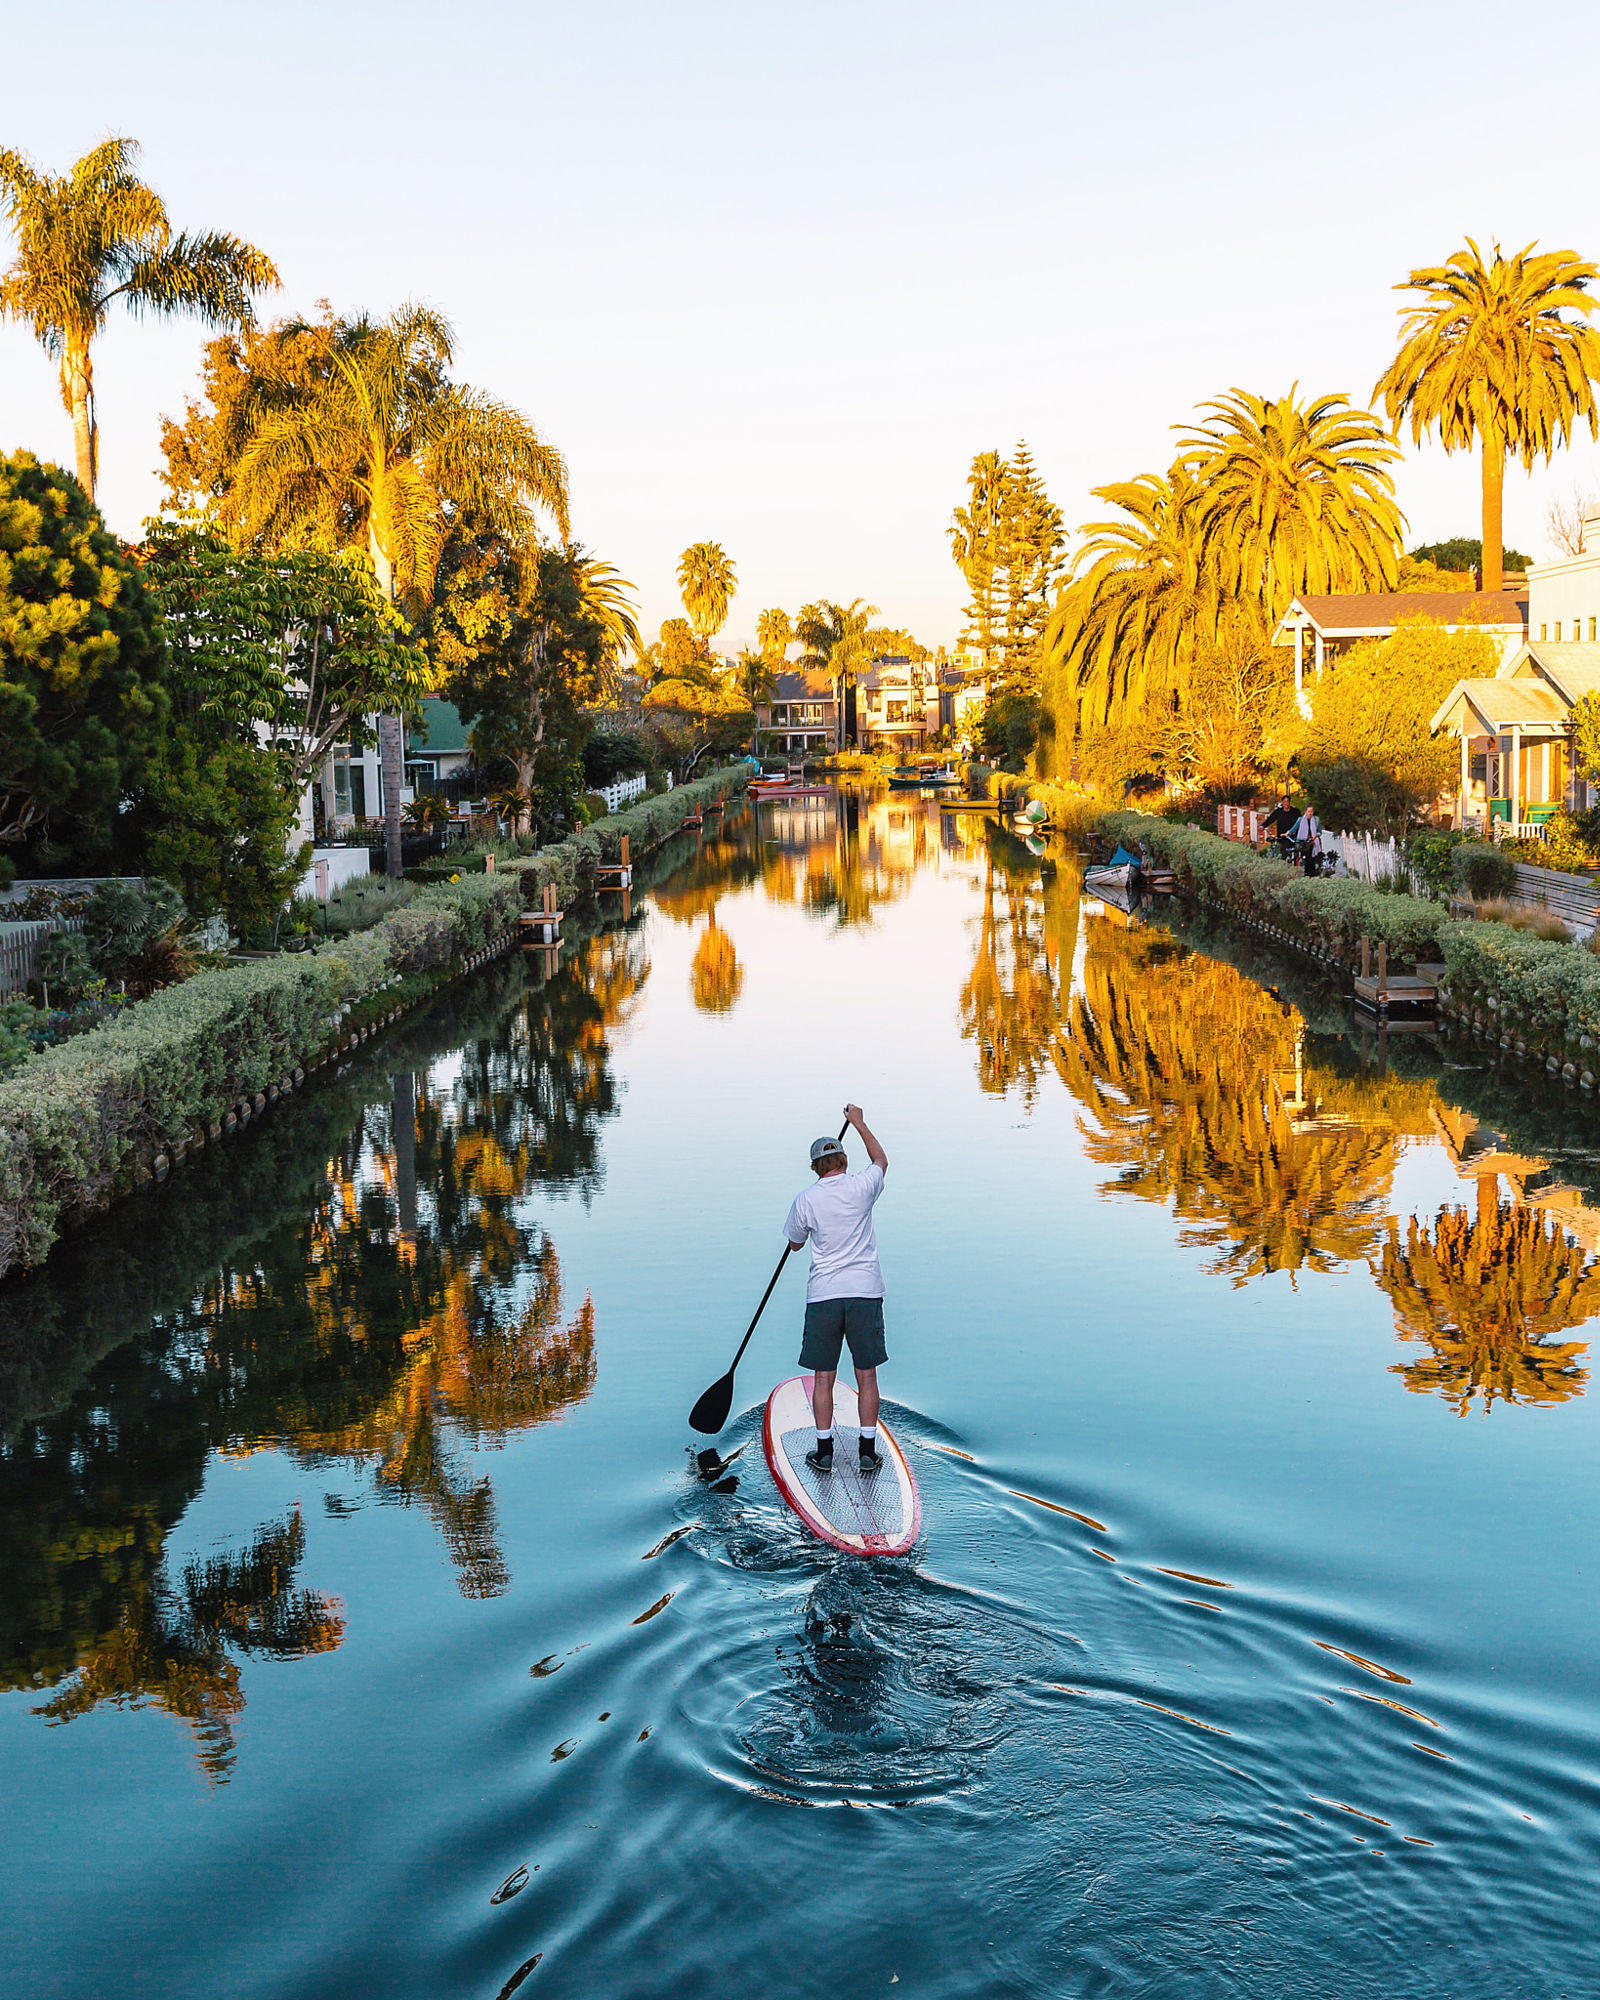 Venice Canals, Los Angeles